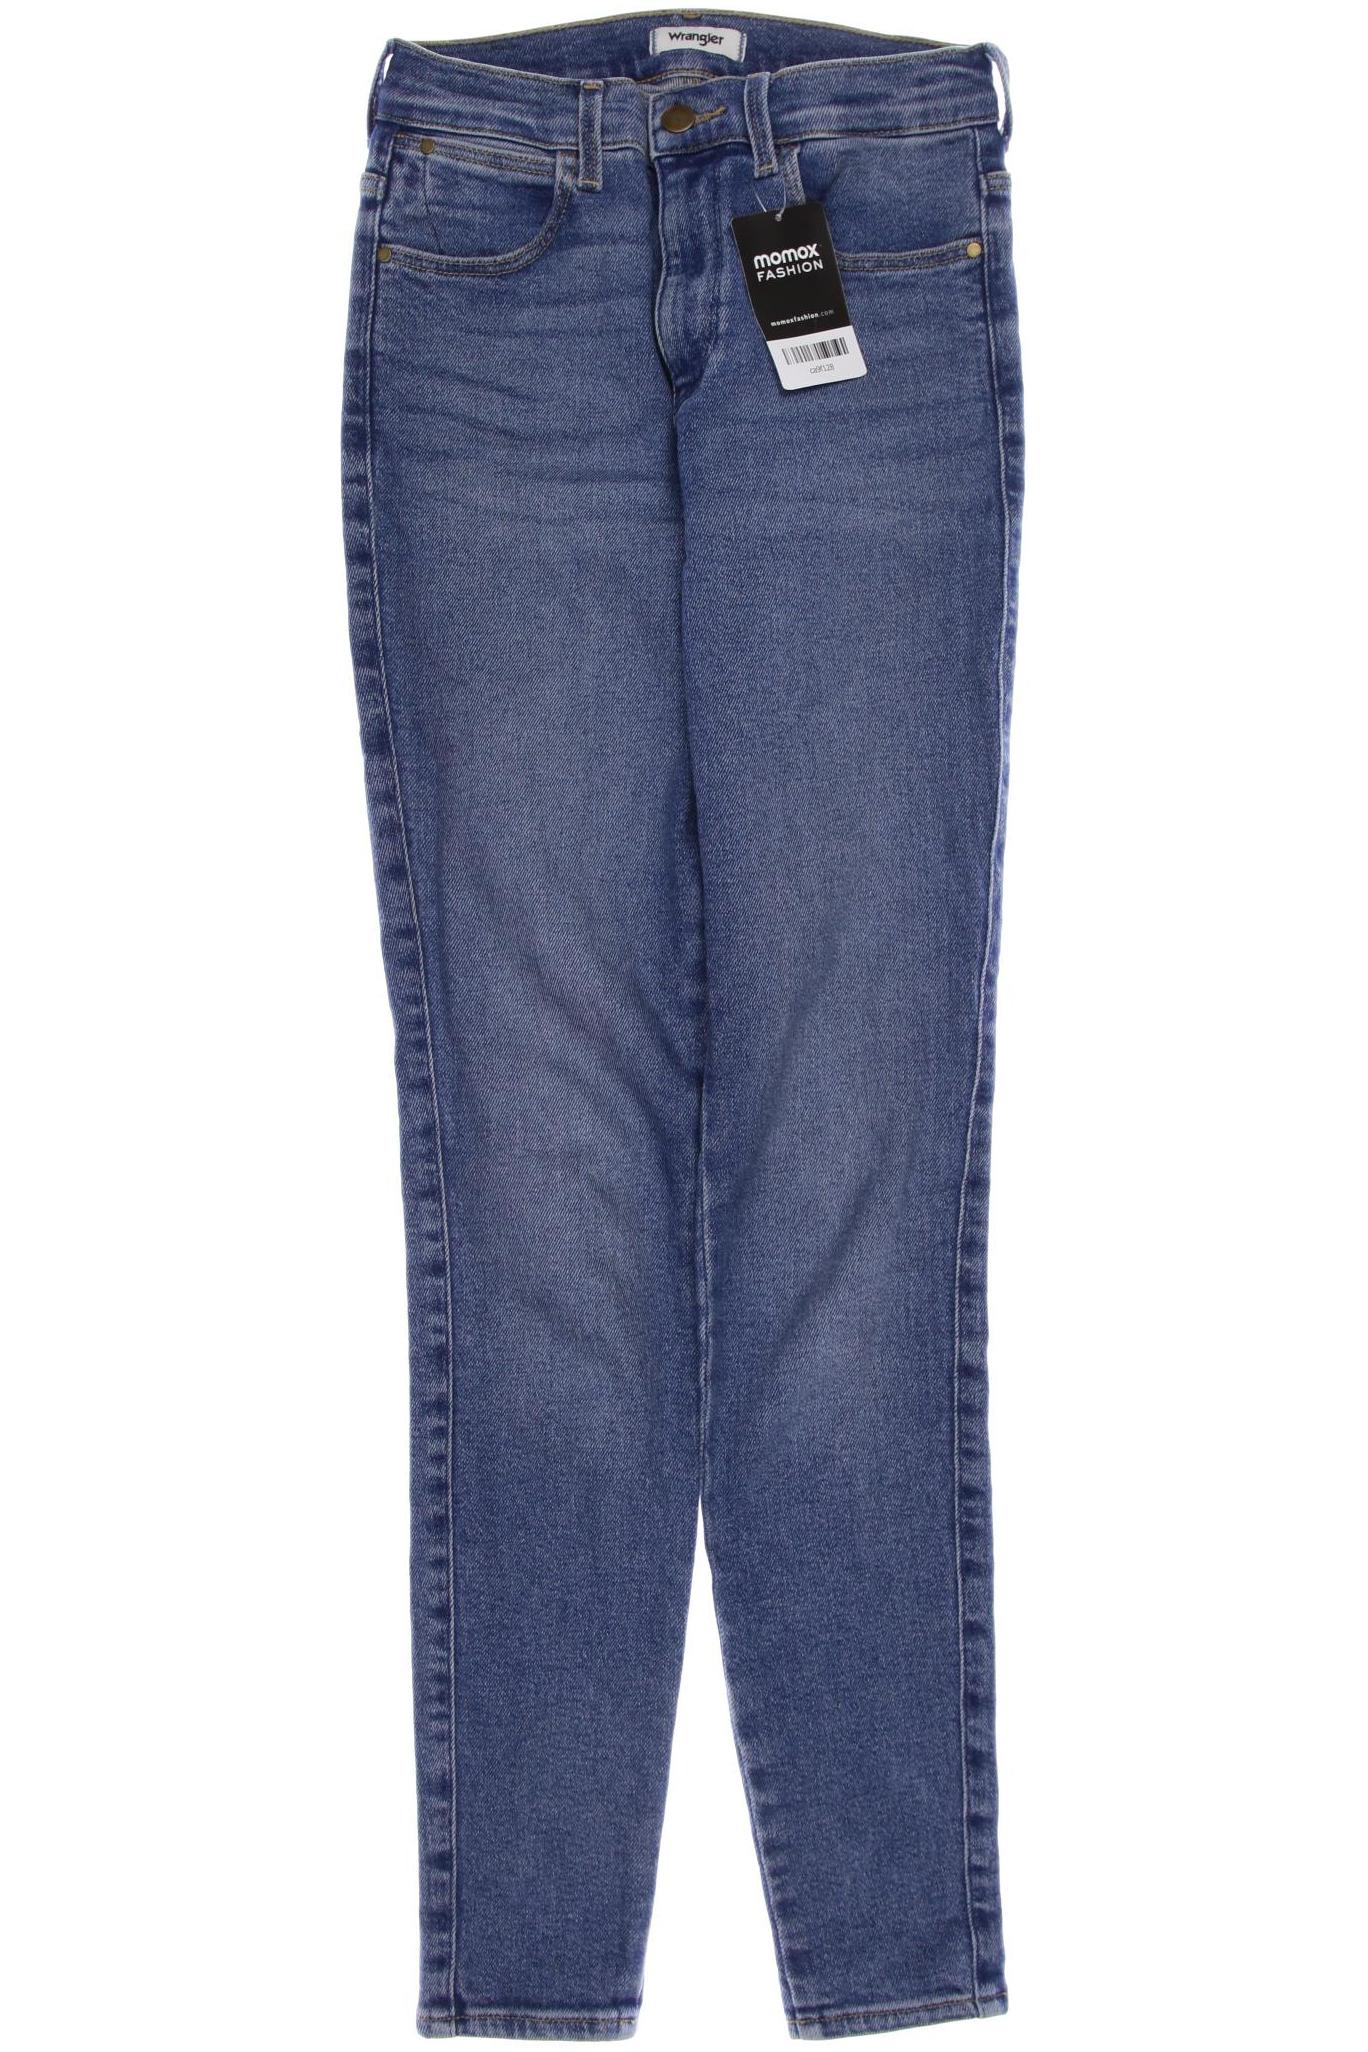 Wrangler Damen Jeans, blau von Wrangler